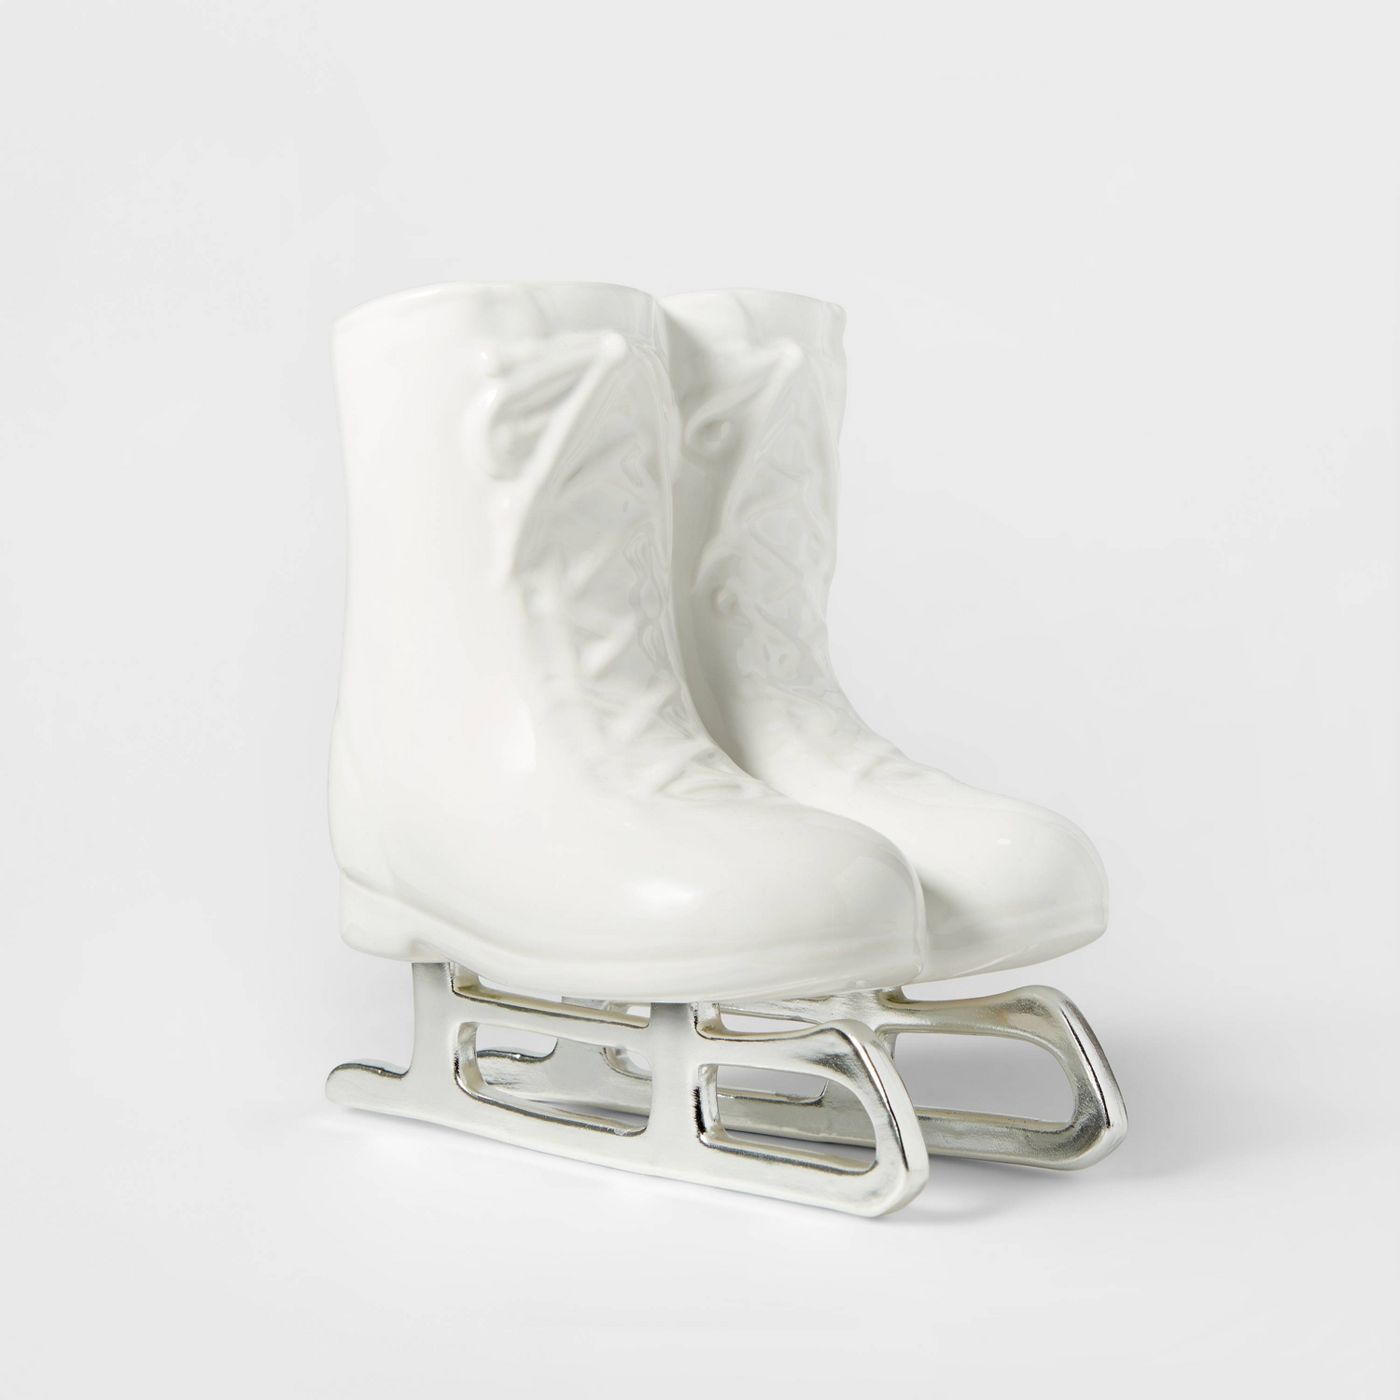 Ceramic Standing Ice Skates Decorative Figurine White - Wondershop™ - image 1 of 3